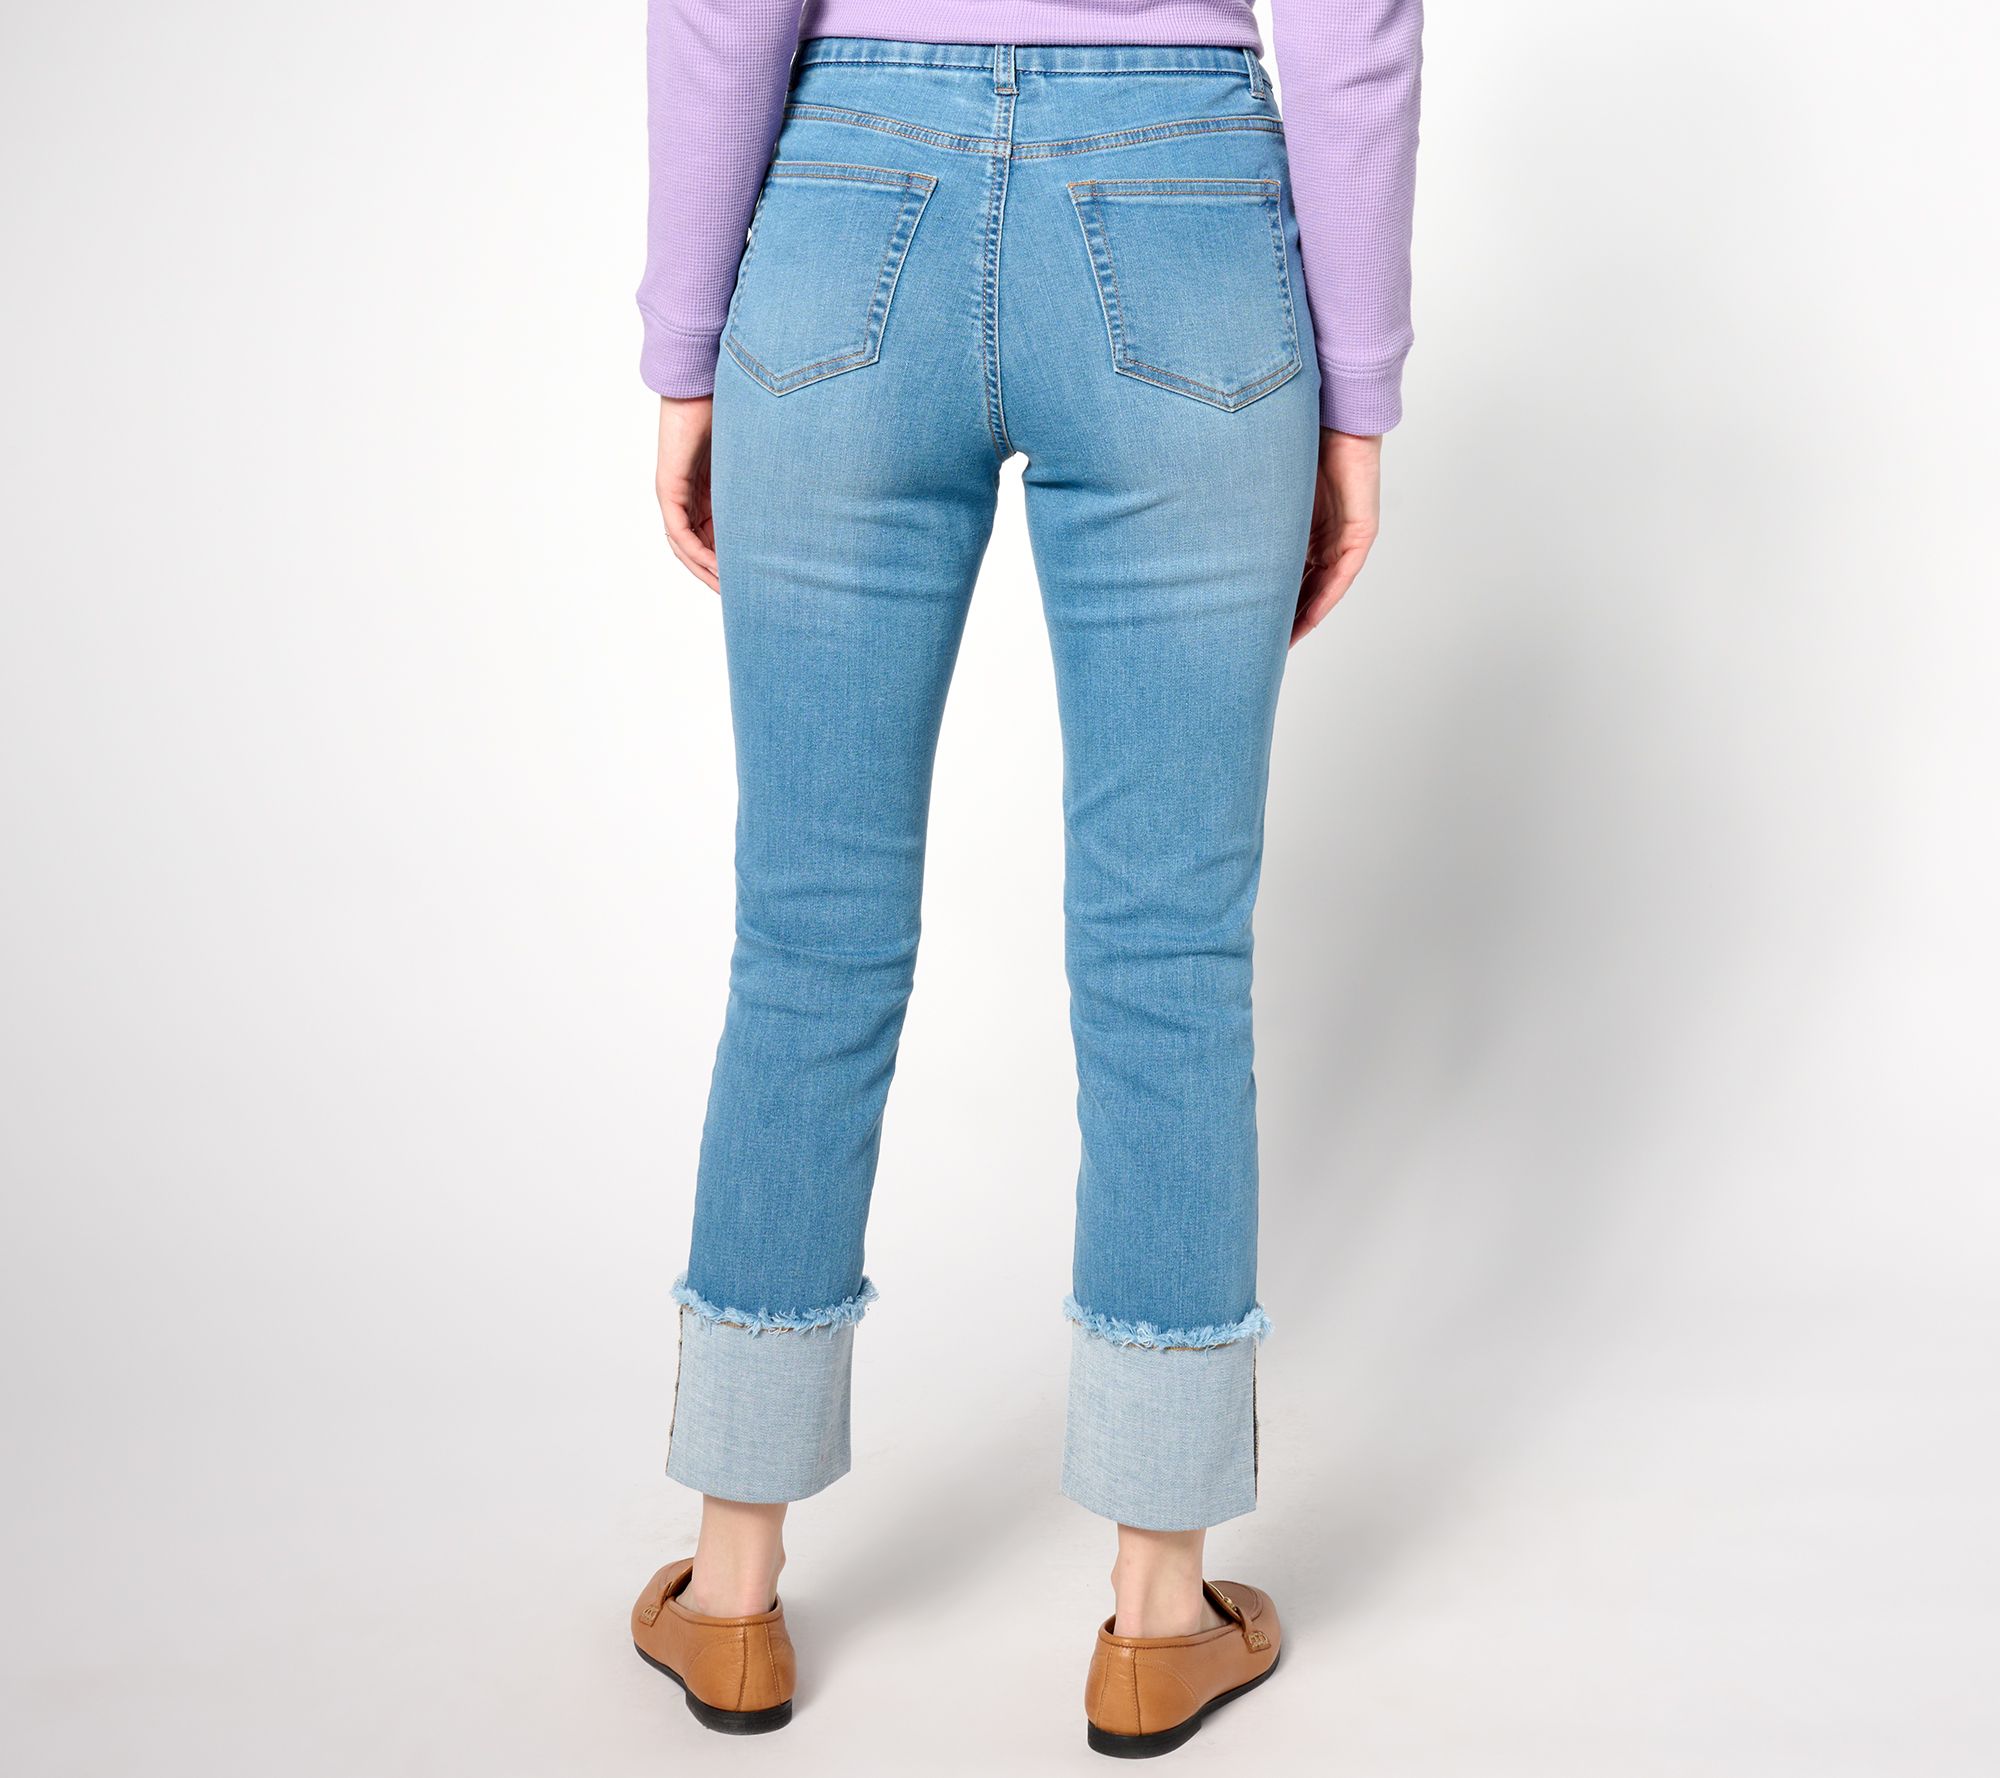 Northern Reflections Basic Blue Comfort Jean in Denim/Dark Wash | Size: 14 Ankle